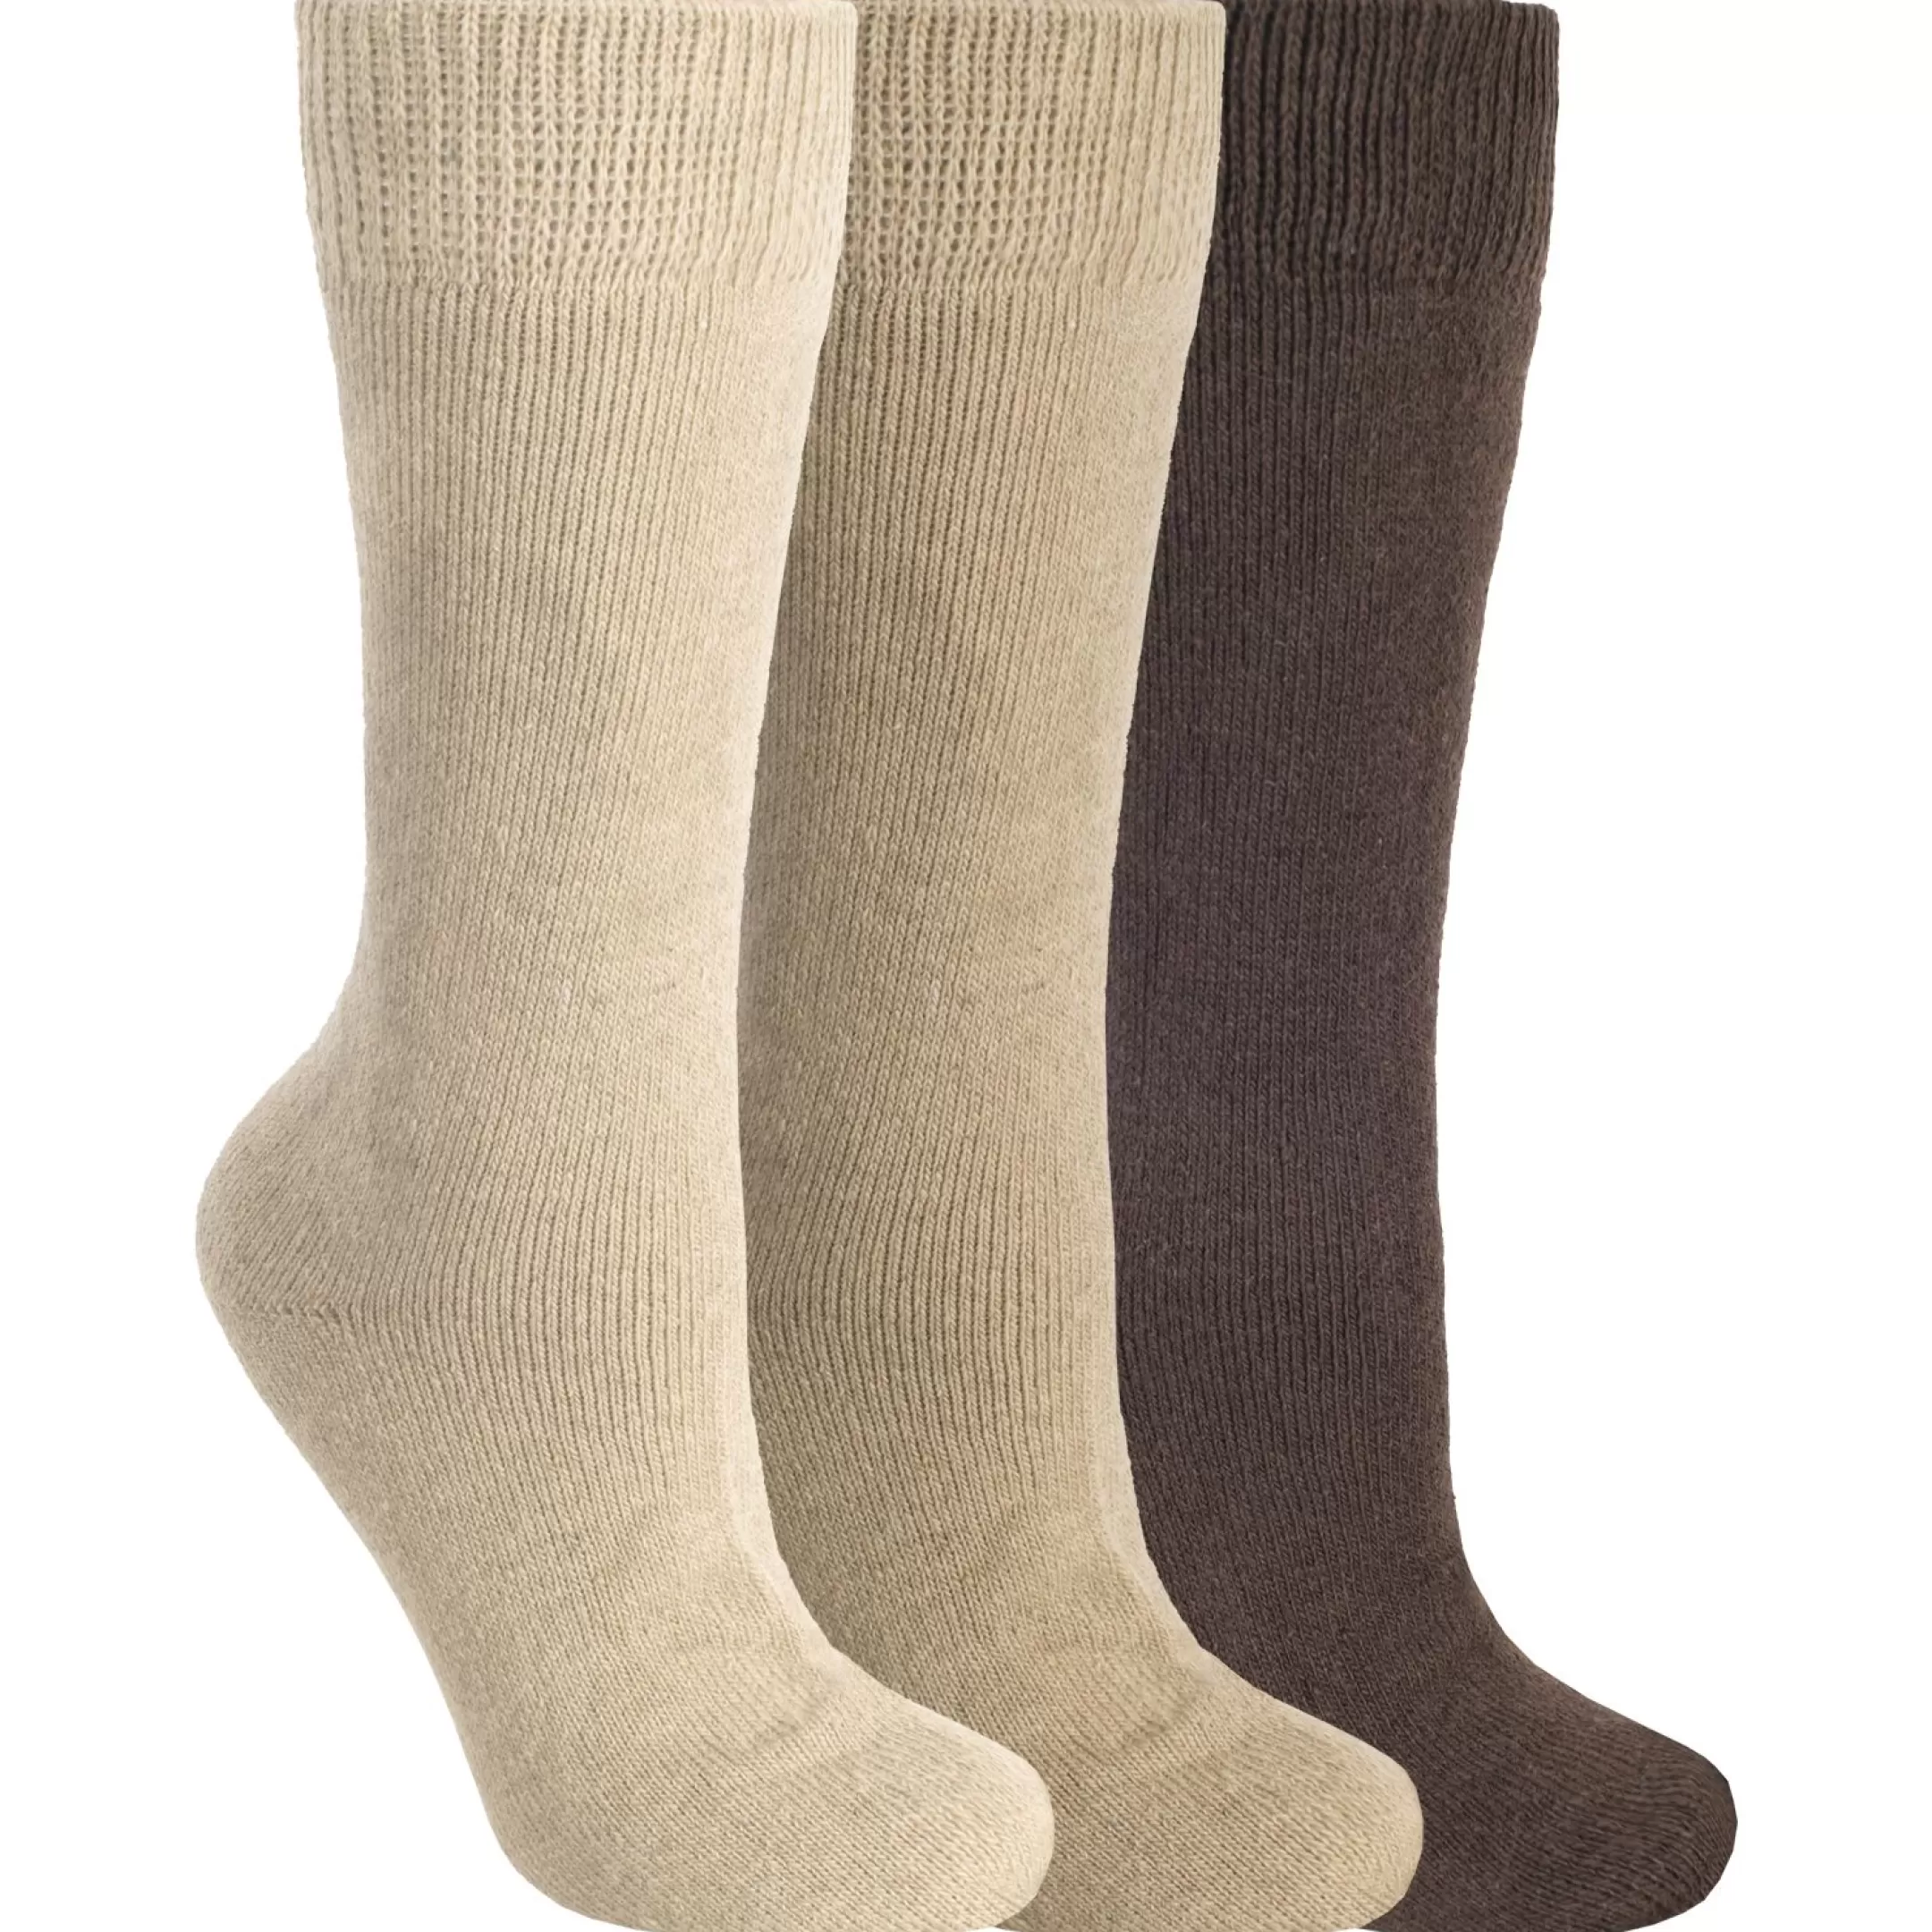 Men's Casual Socks Sliced | Trespass Hot